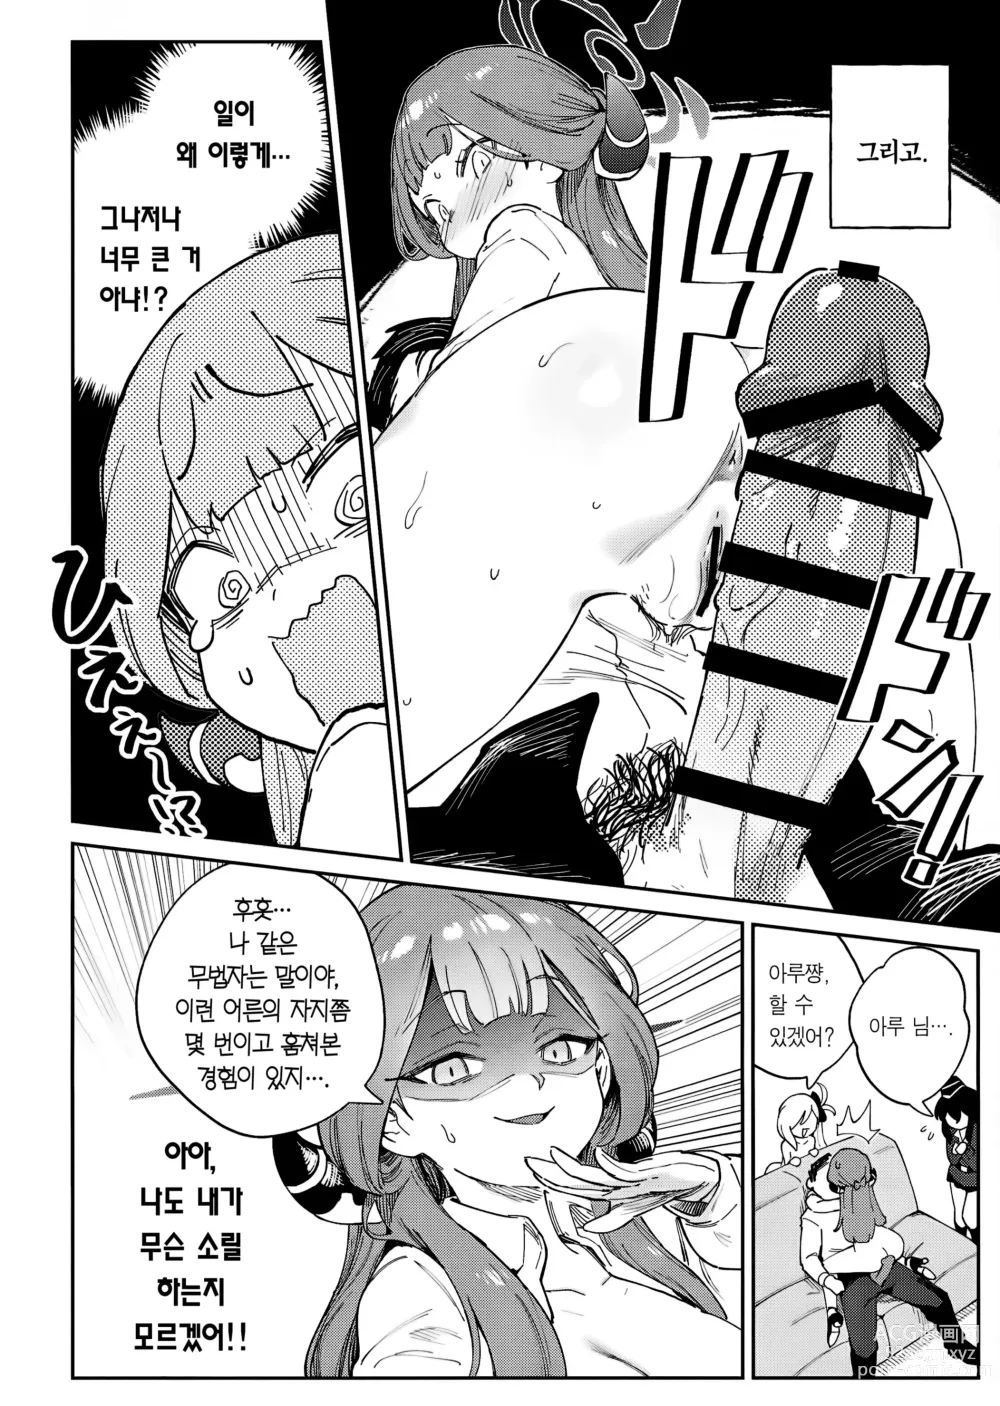 Page 14 of doujinshi 선생과 학생 사이가 이렇게나 개방적인 거였어!?